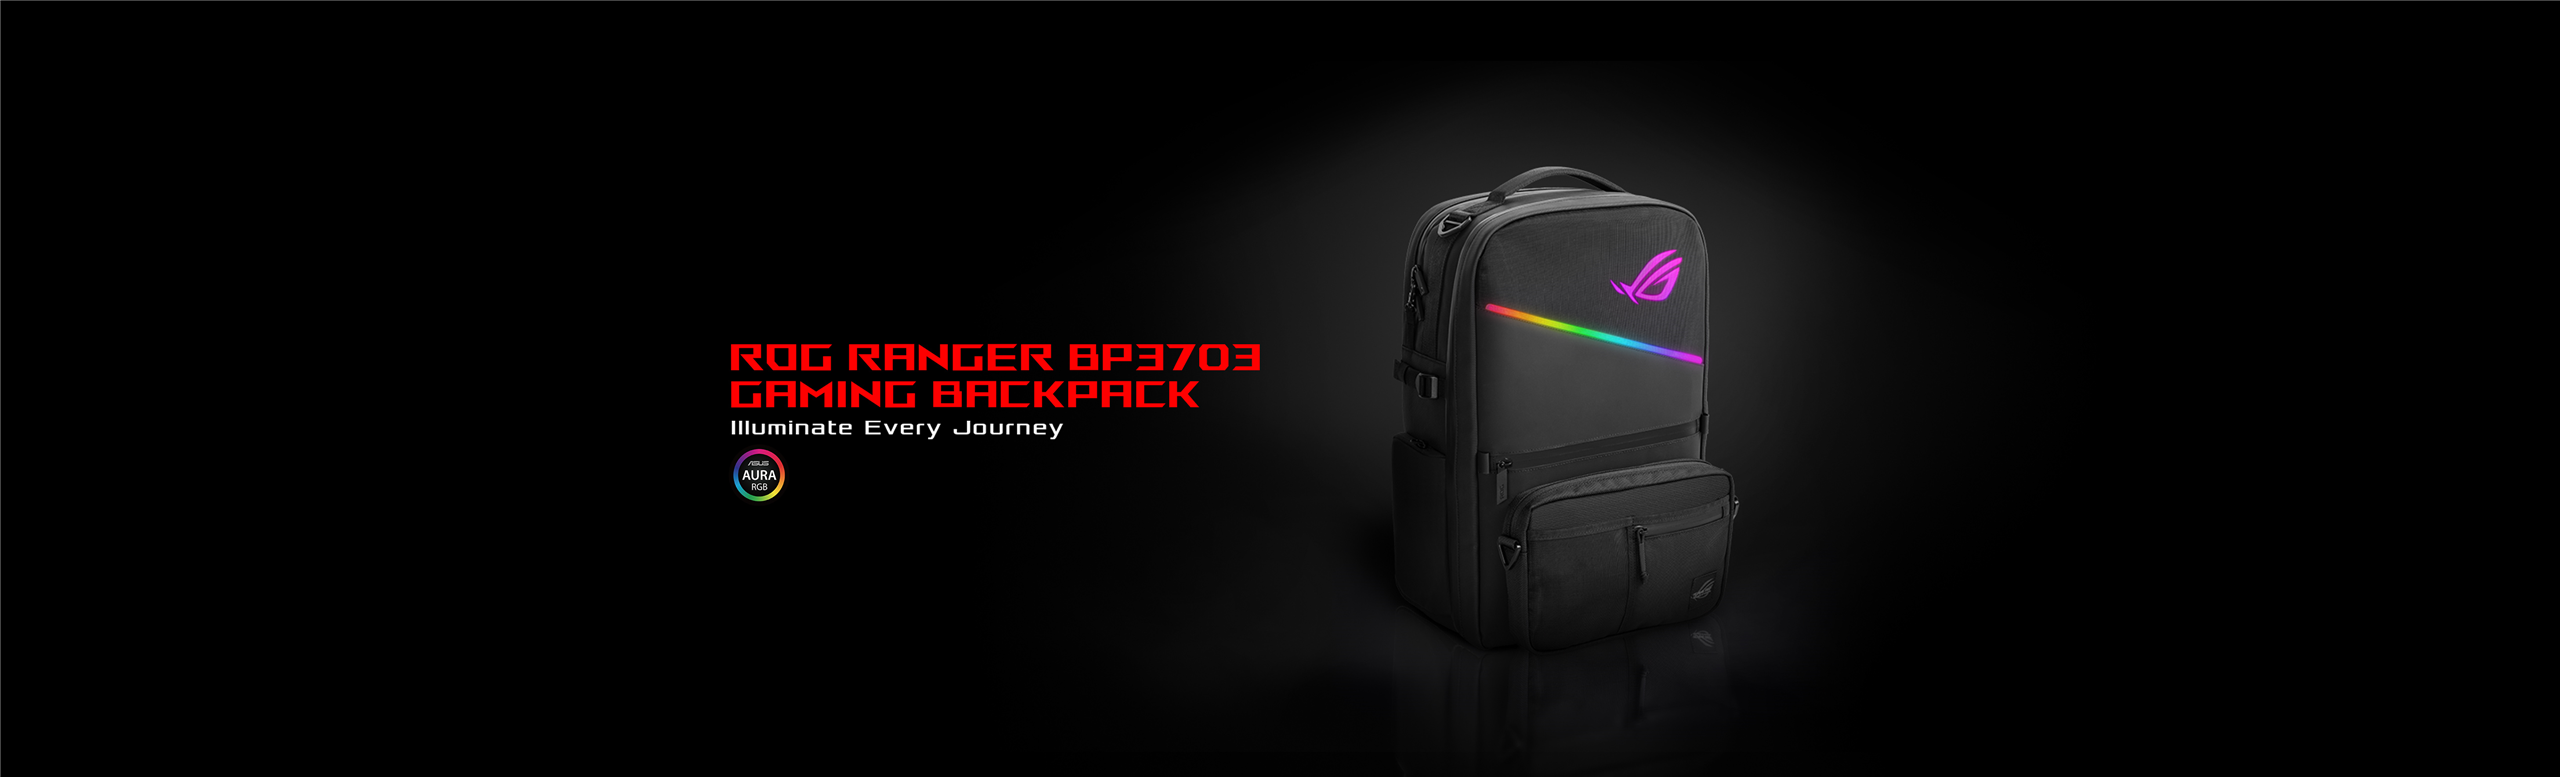 ROG Ranger BP3703 Gaming Backpack